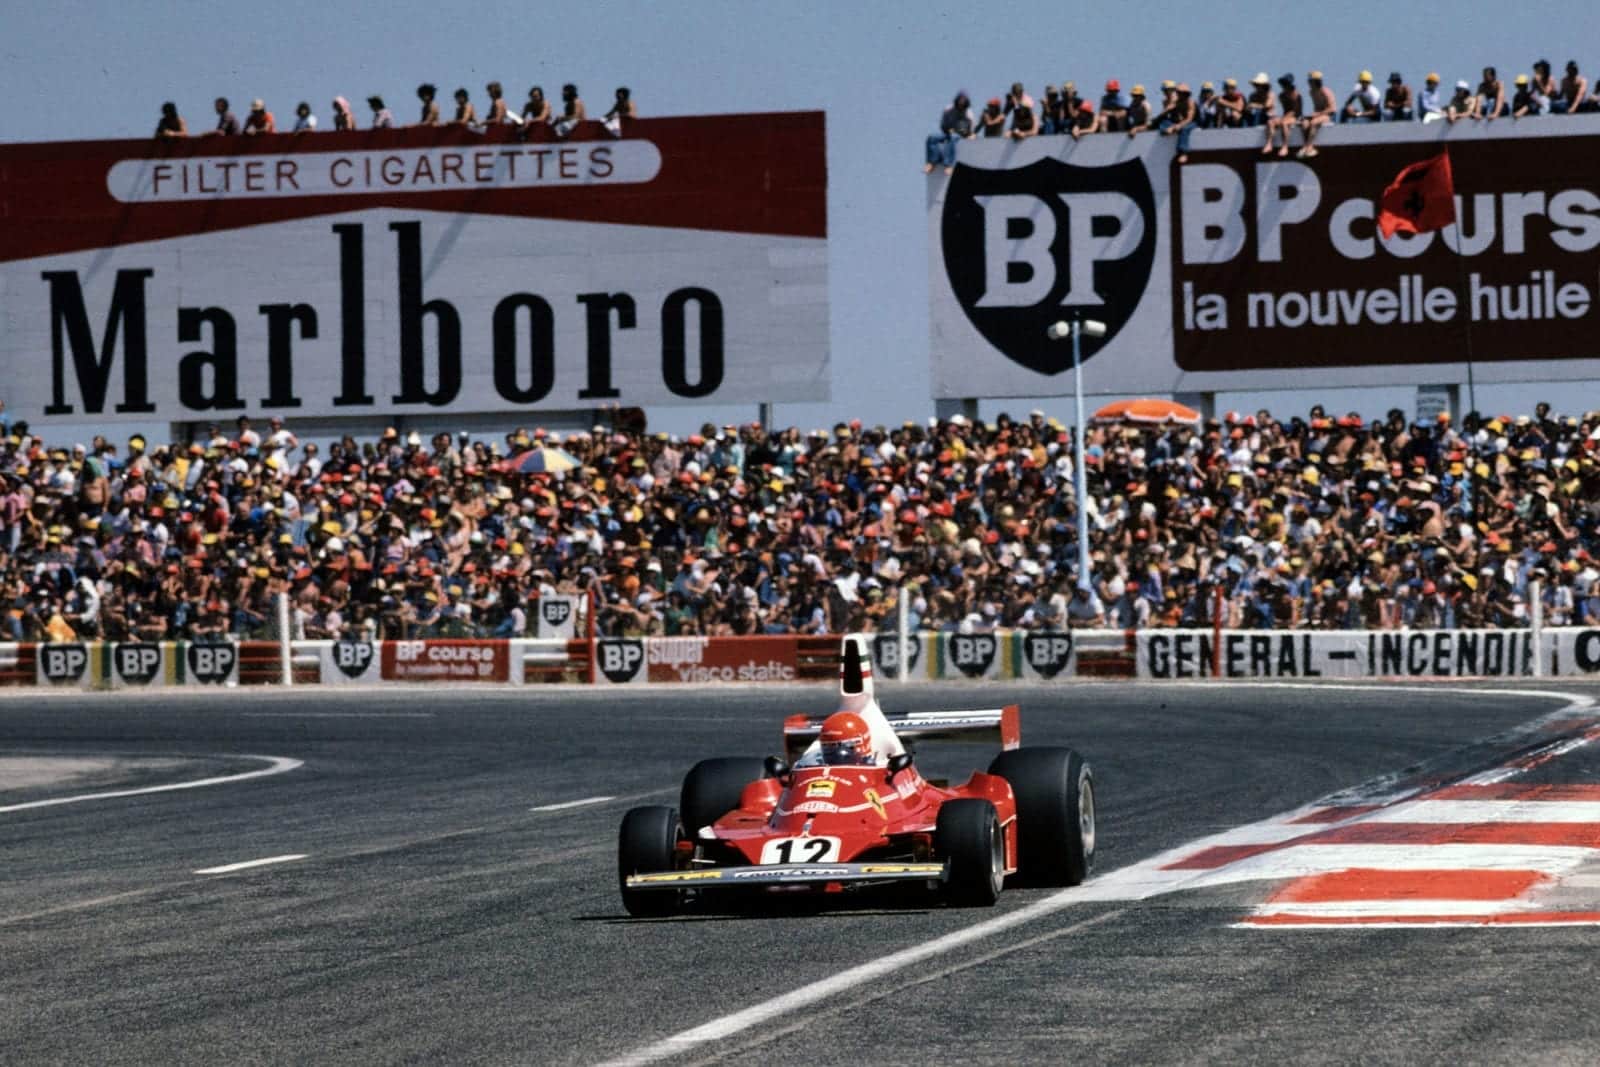 Niki Lauda (Ferrari) rounds the last corner at the 1975 French Grand Prix, Paul Ricard.